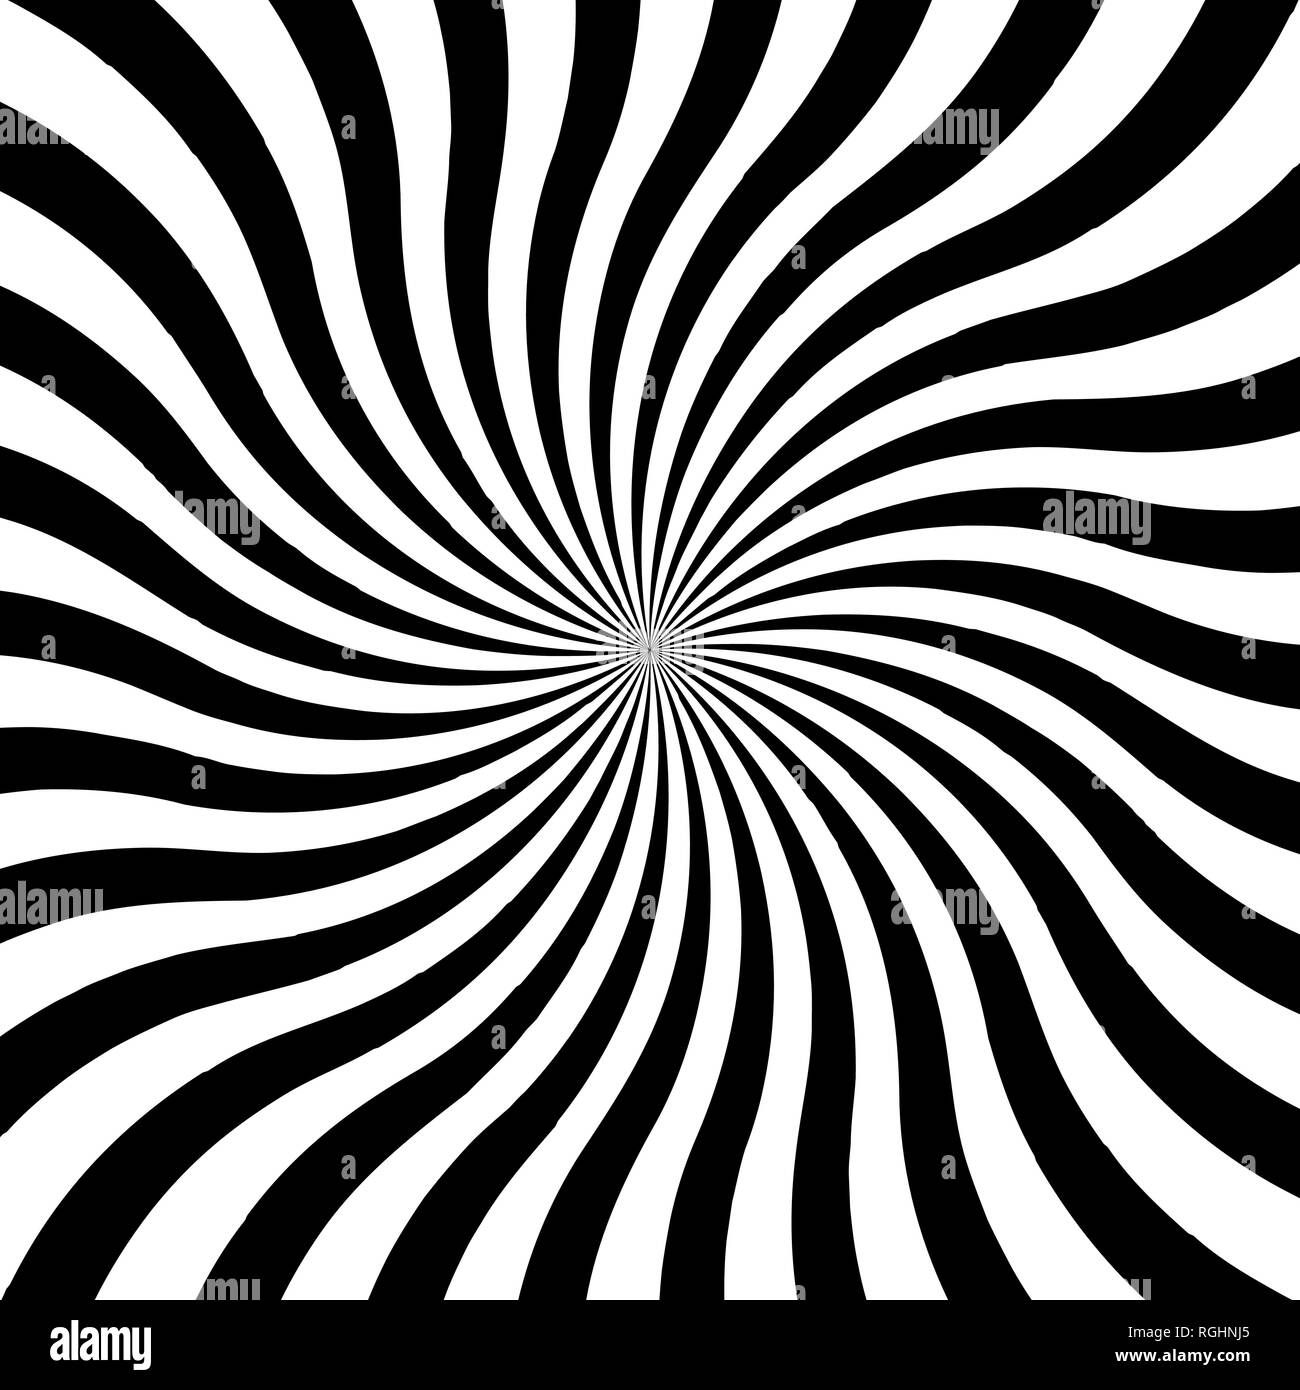 Vector illustration. Hypnotic swirl spiral background Stock Vector ...